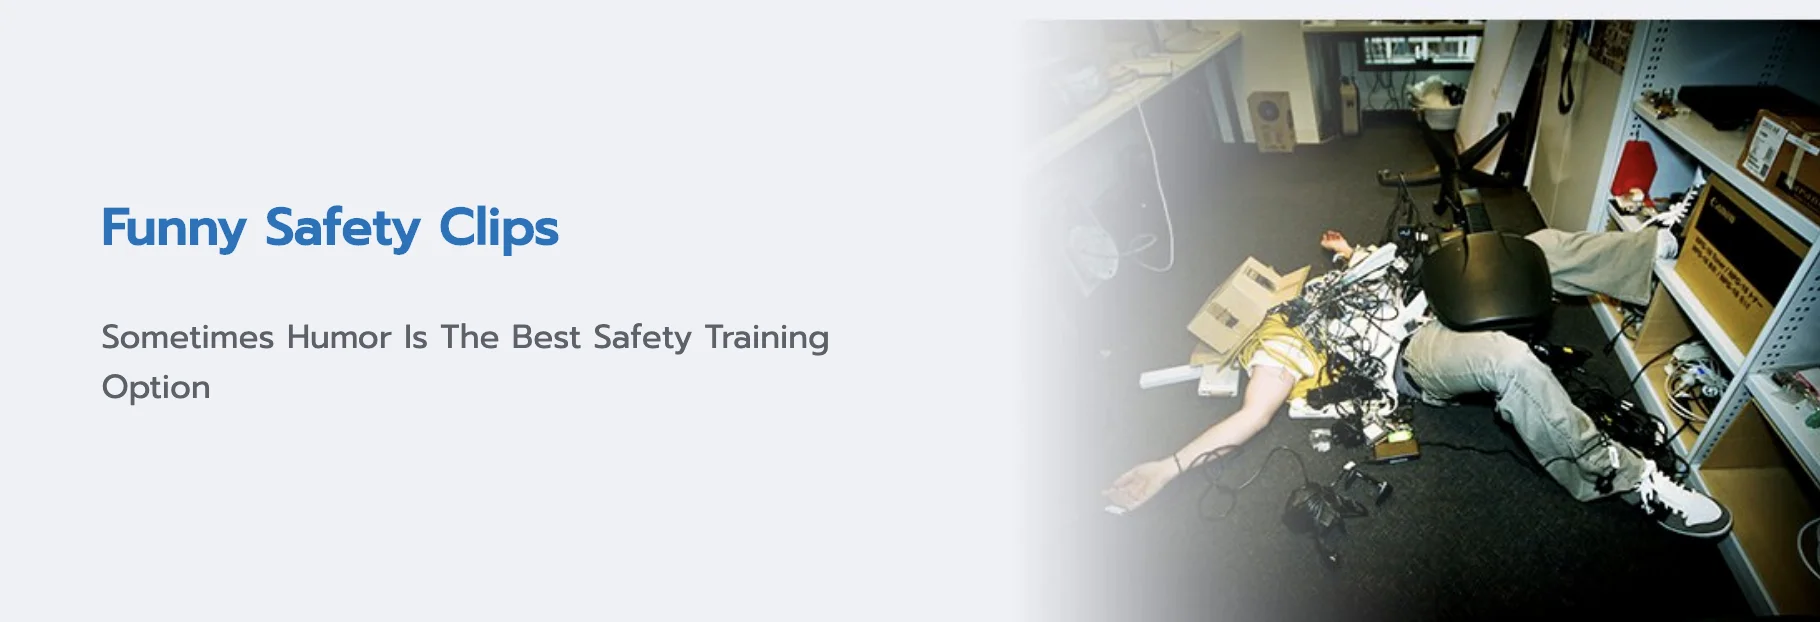 Funny Safety Videos | Atlantic Training Blog | EHS Safety Shorts